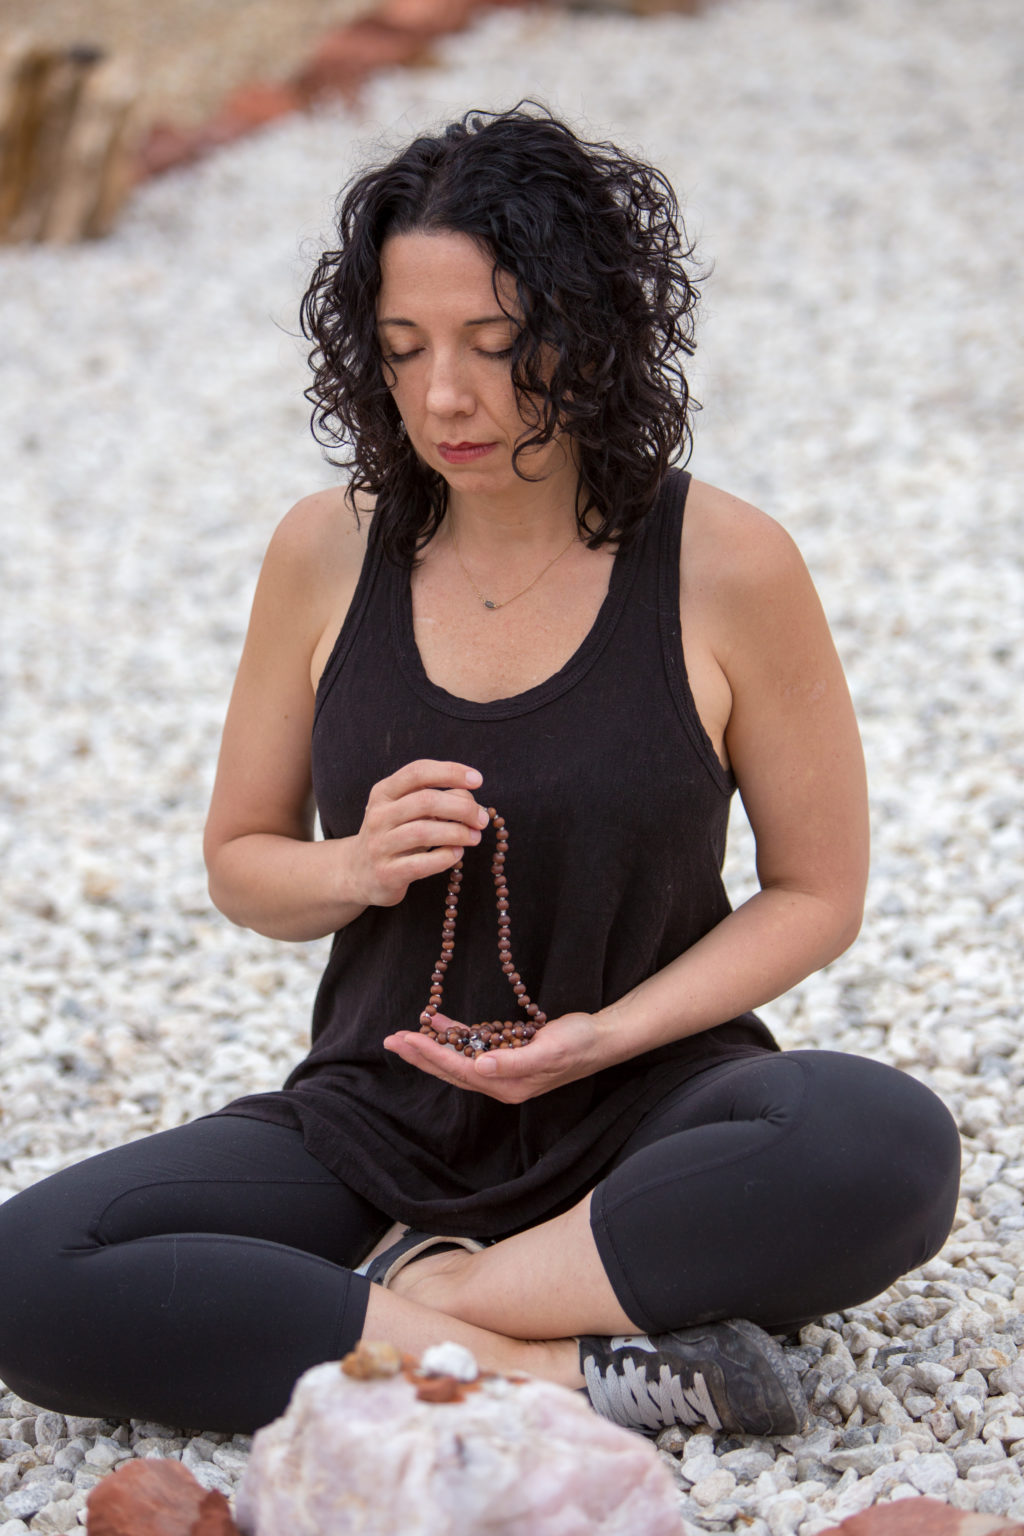 Woman meditating with prayer beads